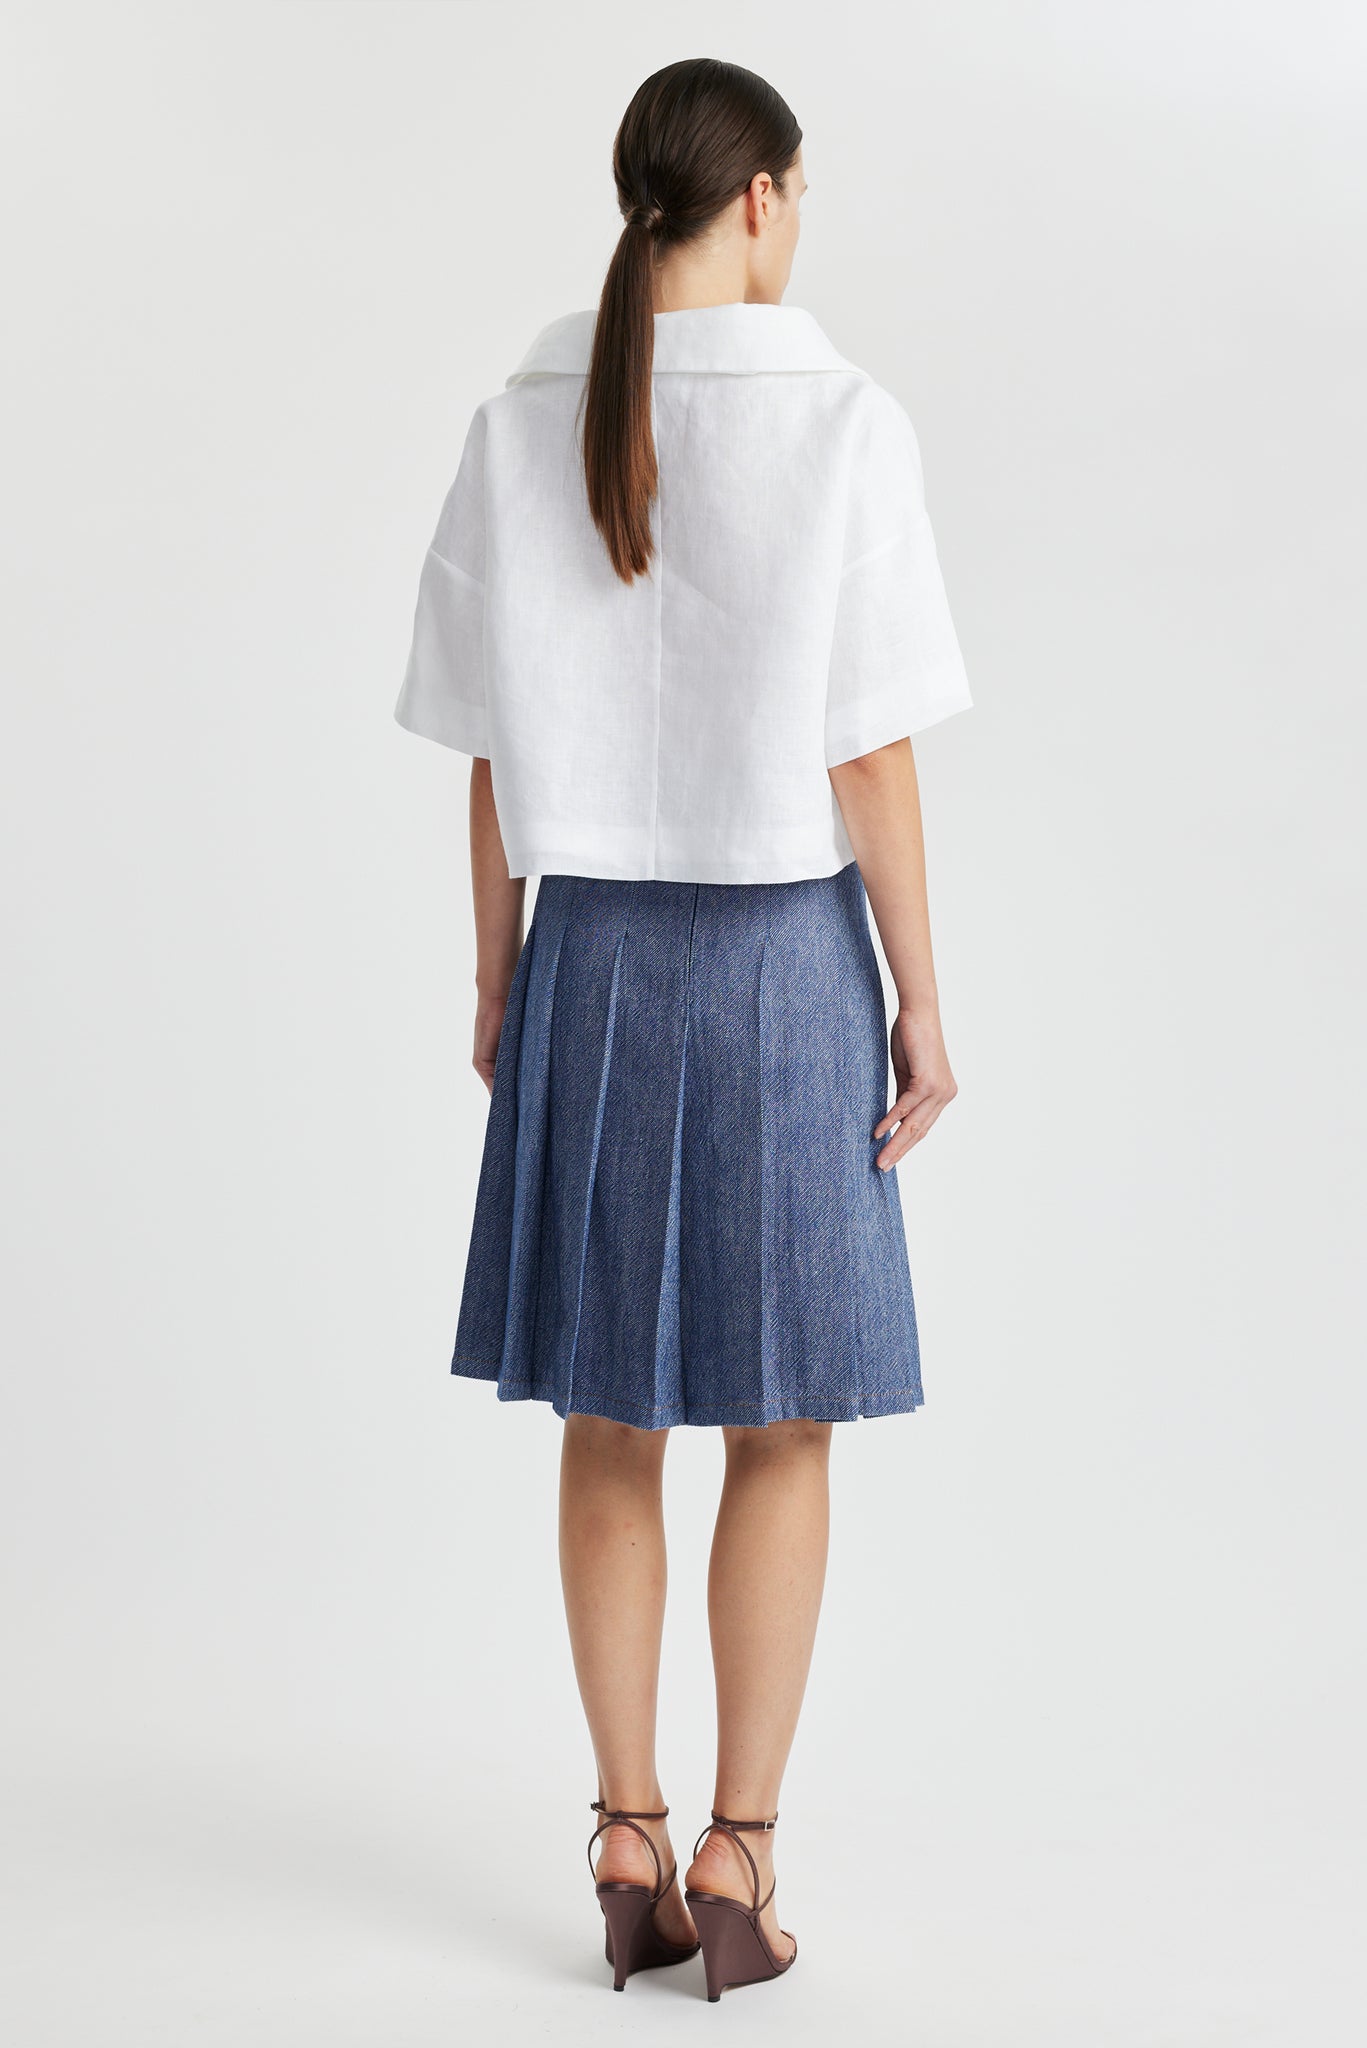 Beryl Skirt in Indigo Cotton Denim | Emilia WIckstead